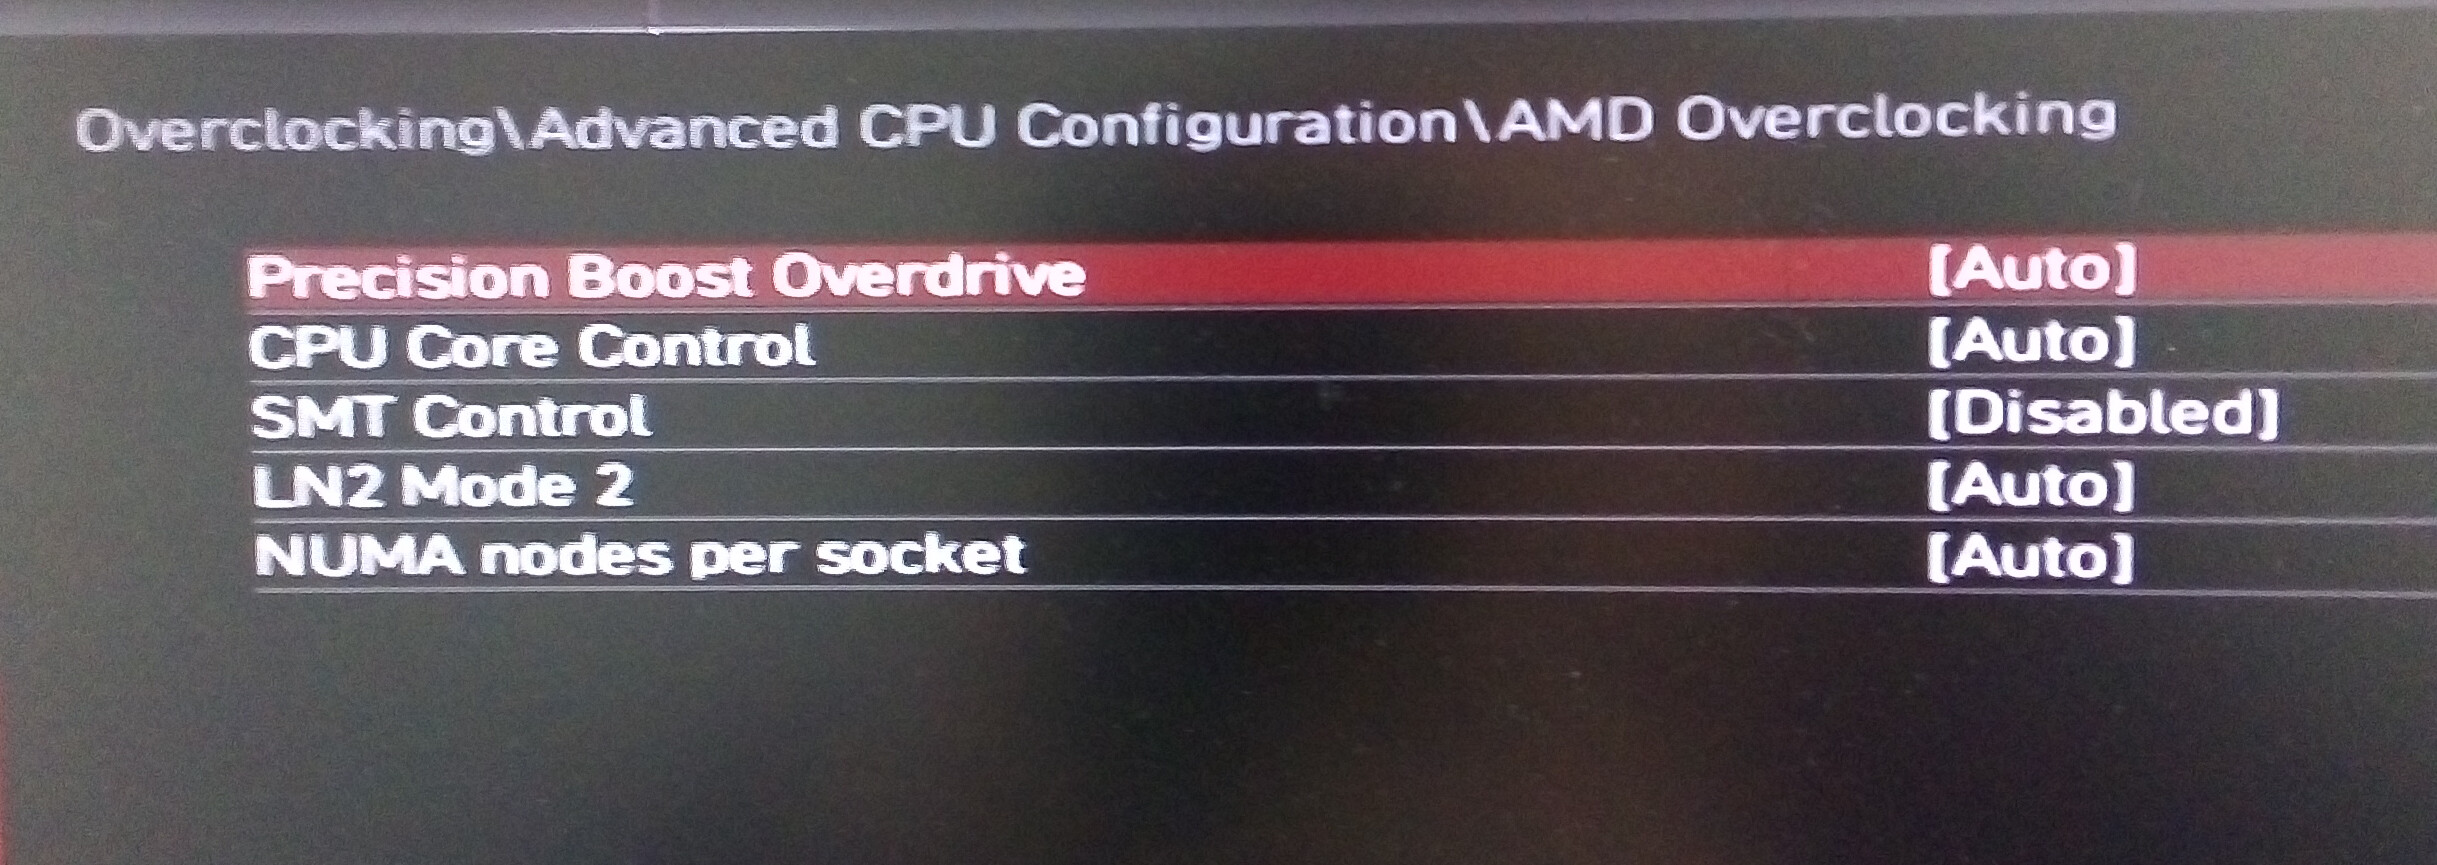 AMD Overclocking.PNG.jpg